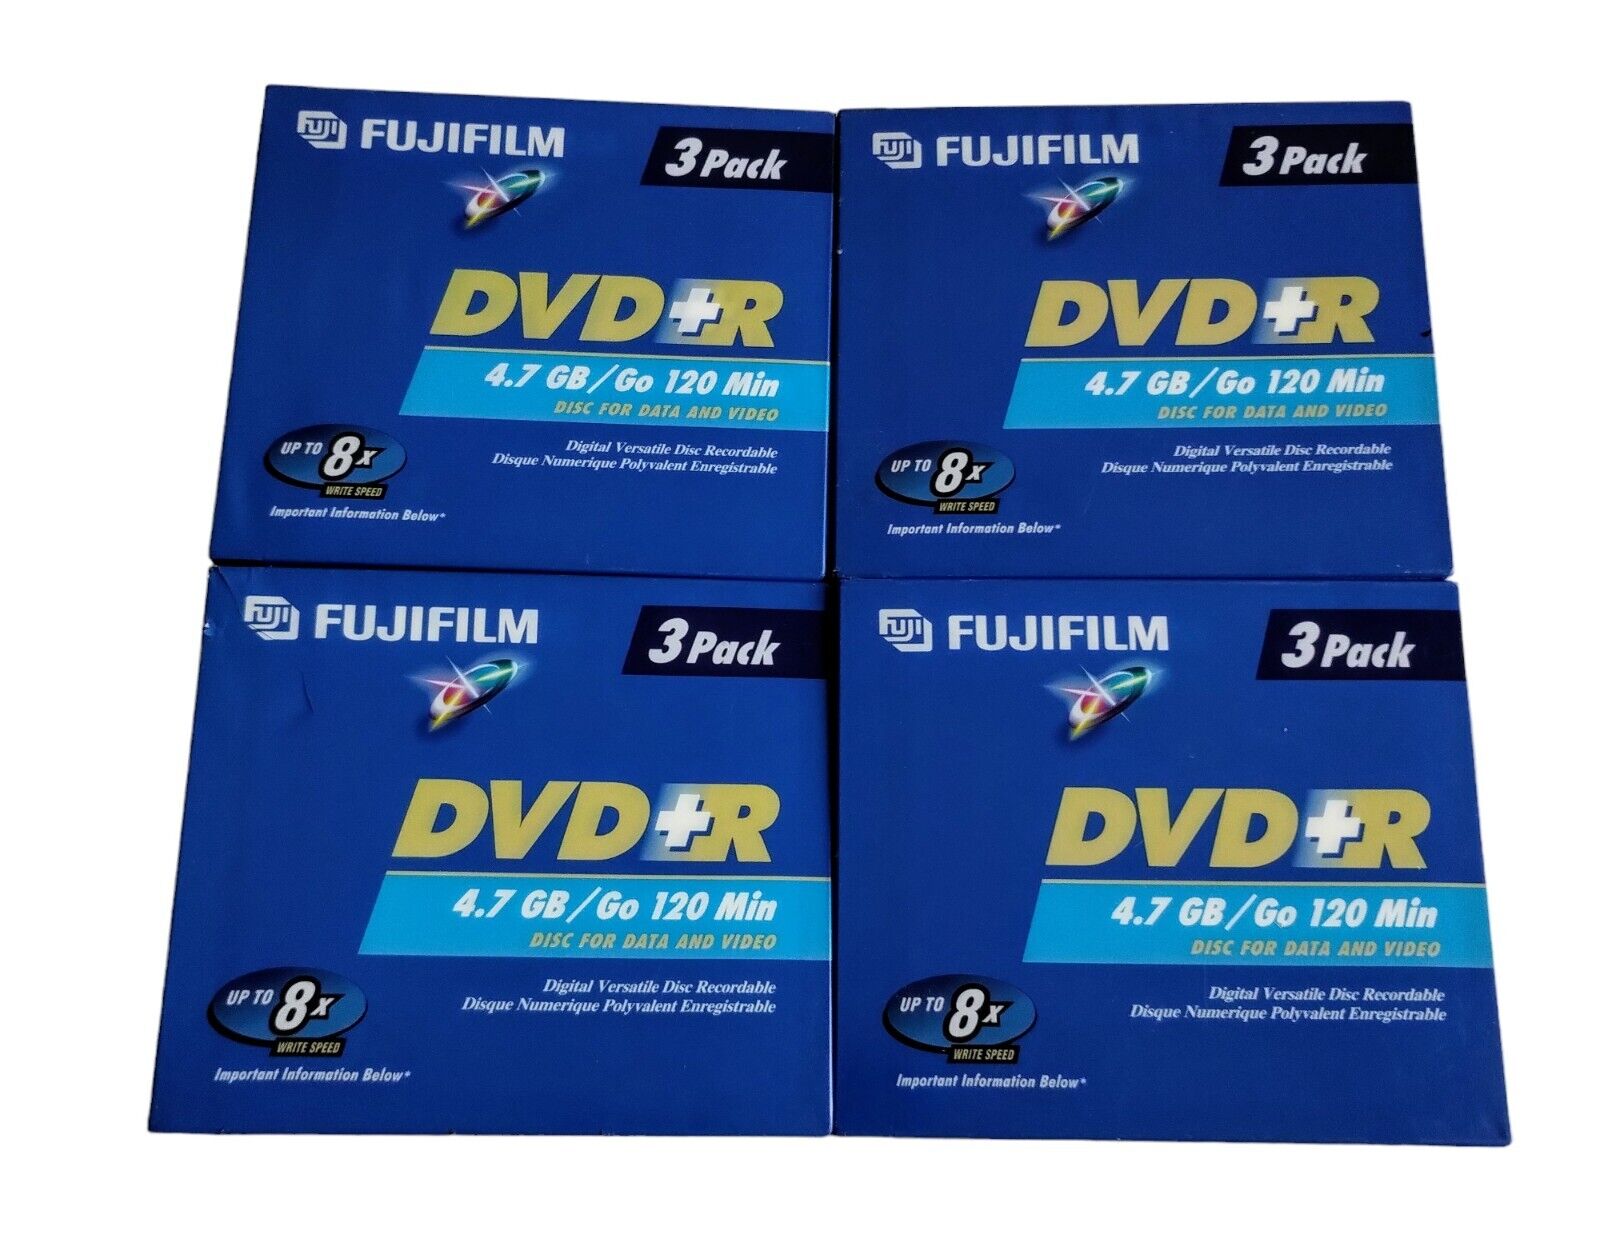 (LOT OF 4) Fujifilm DVD+R Discs For Data Video 4.7 GB/Go 120 Min 3 Pack New